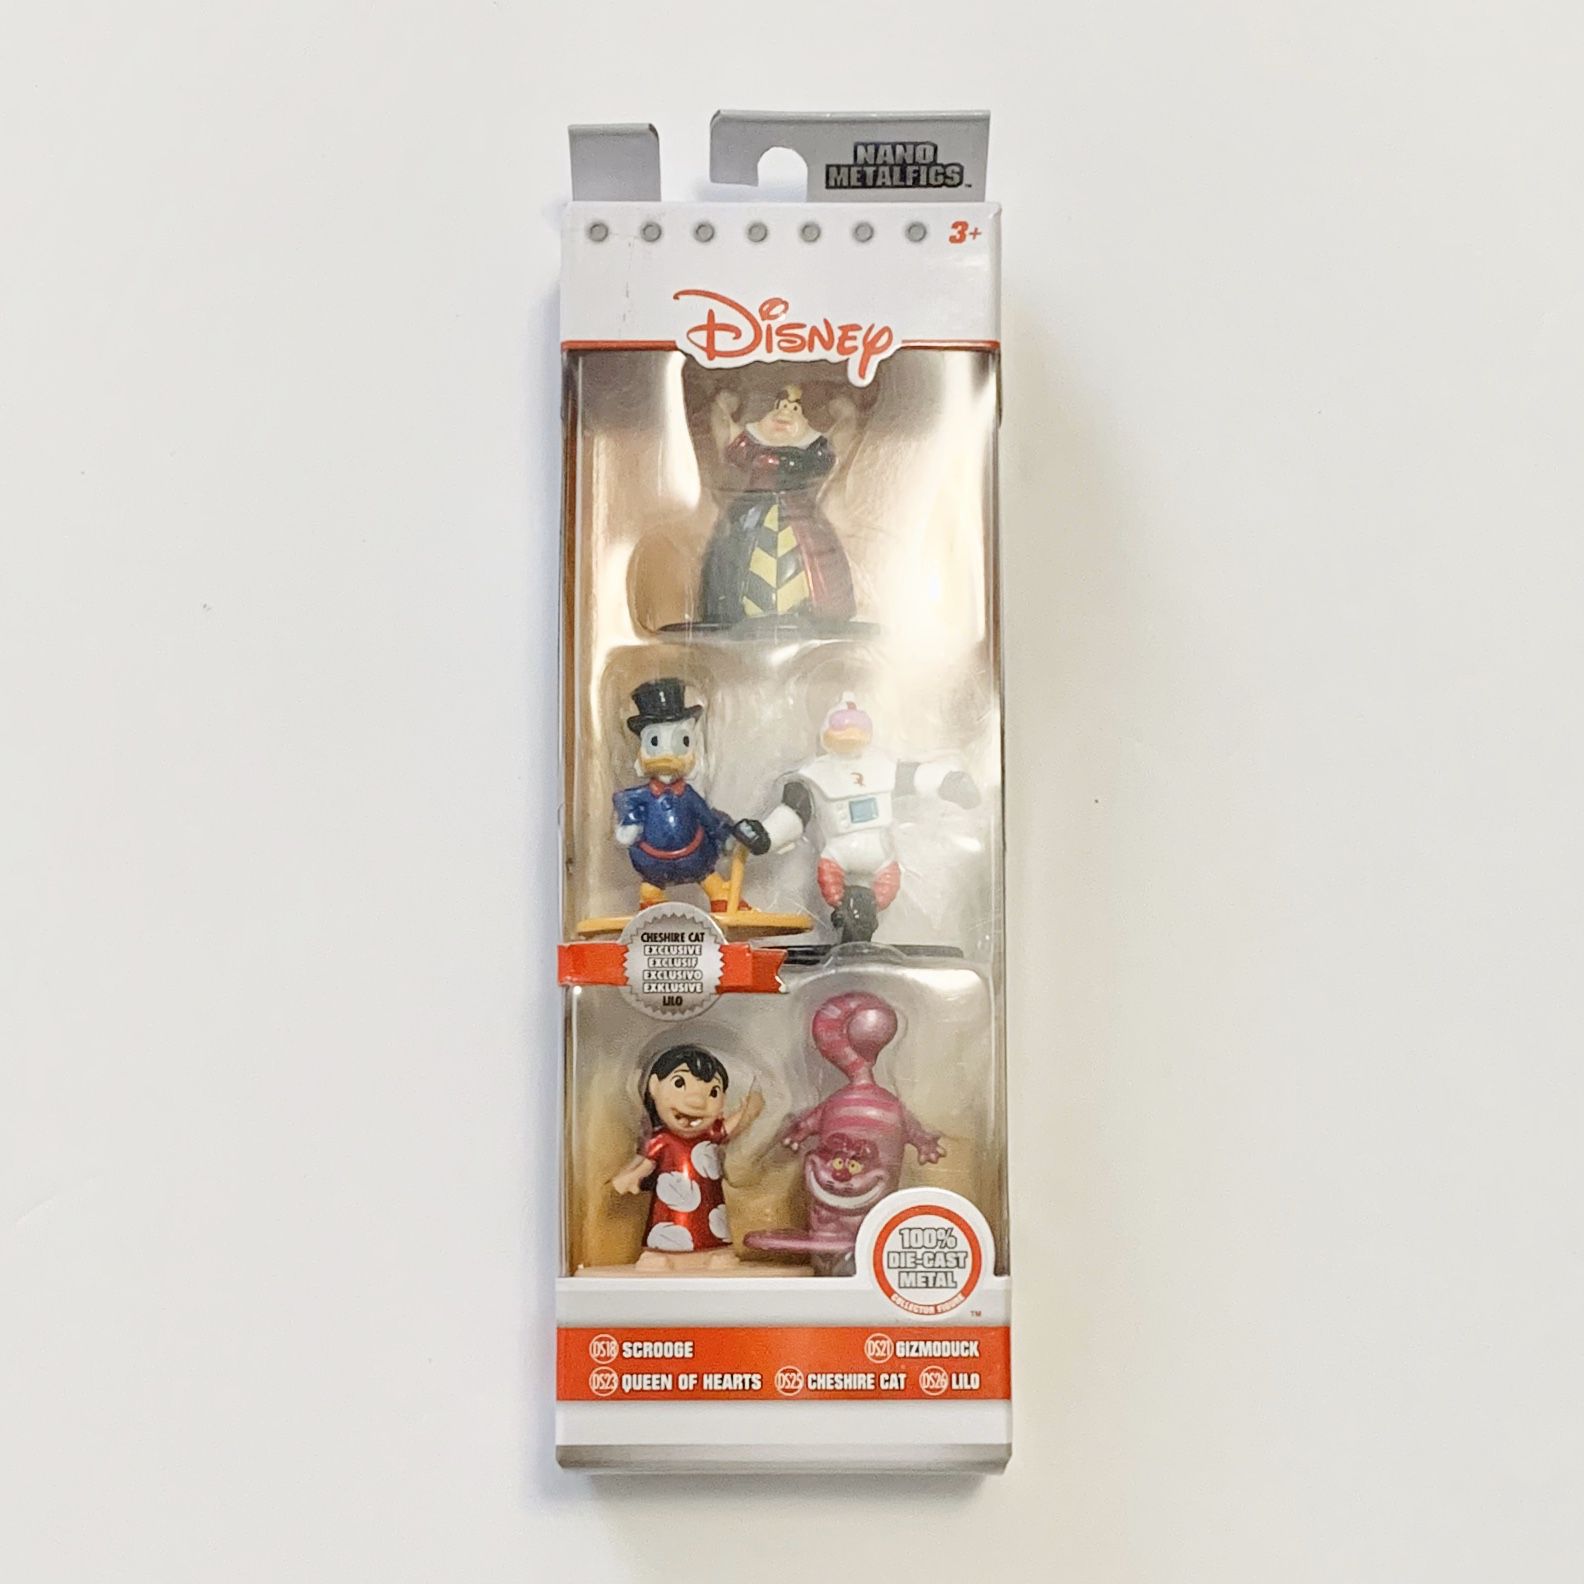 Disney Nano Metalfig figurines